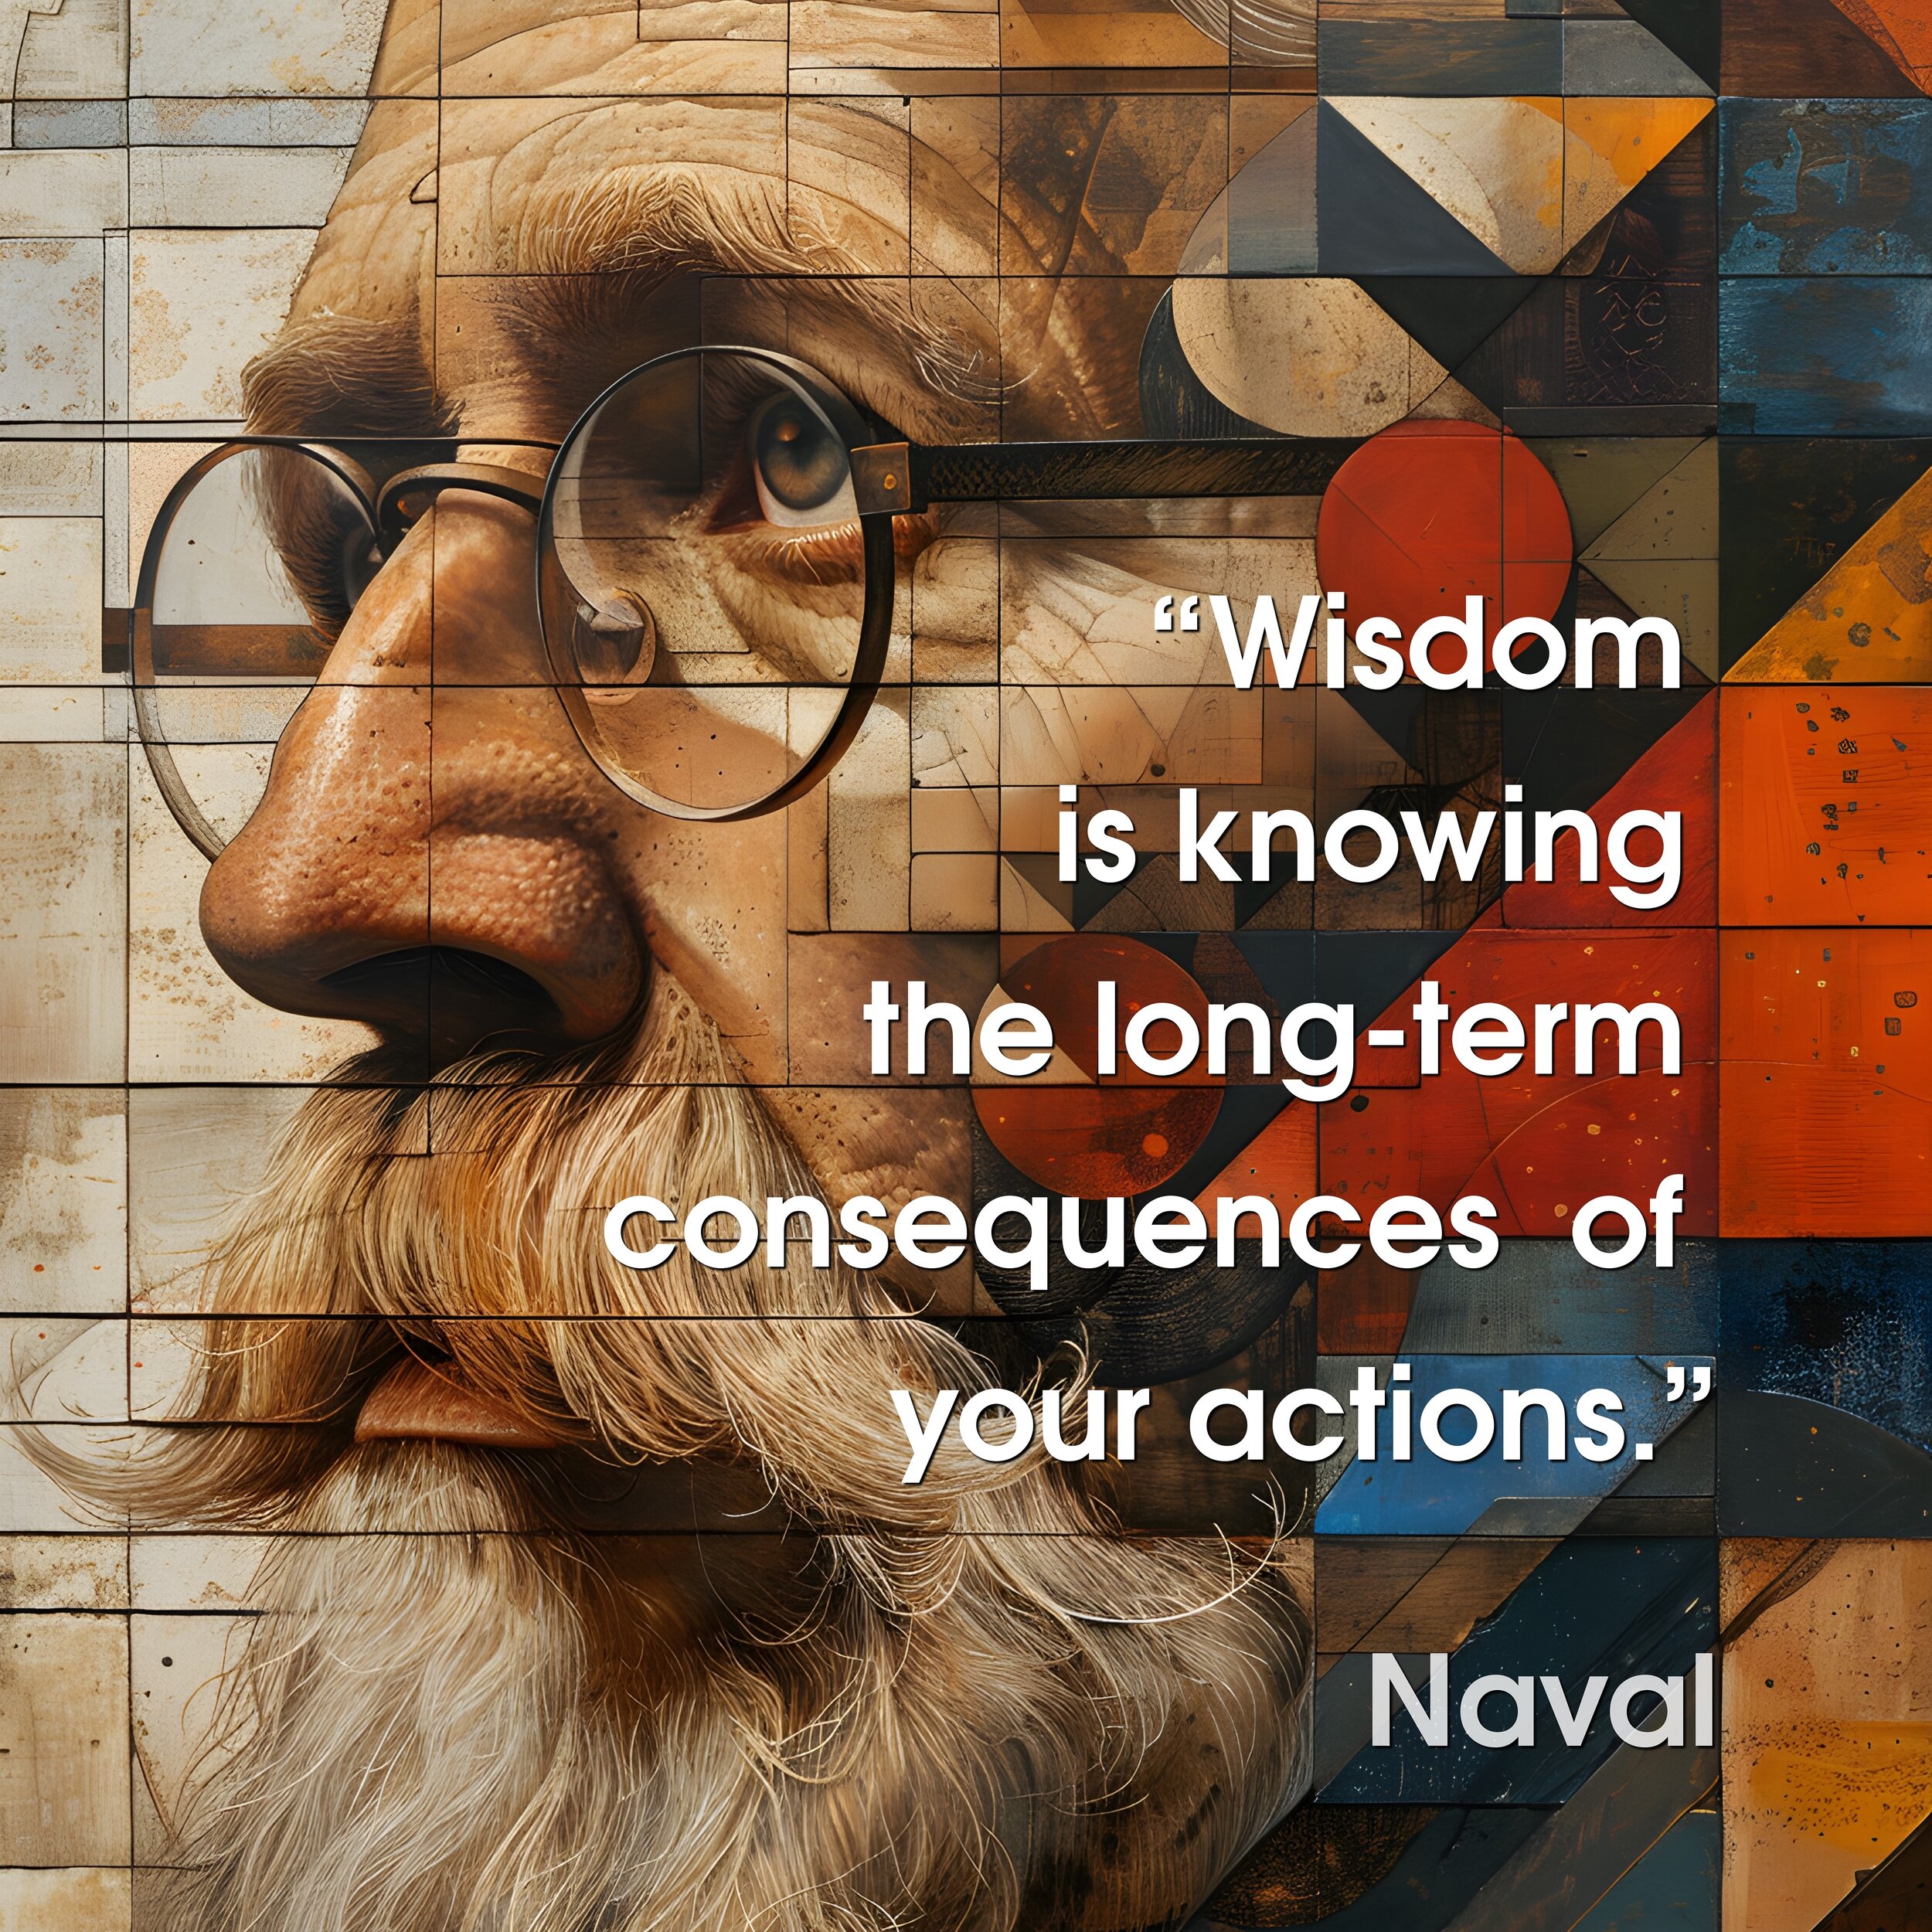 wisdom.

Now available as big wall art. Shop now 
https://designofperception.com/wall-arts/p/wisdom-framed-poster

#bigwallart #aiart #wisdom #quotes #naval